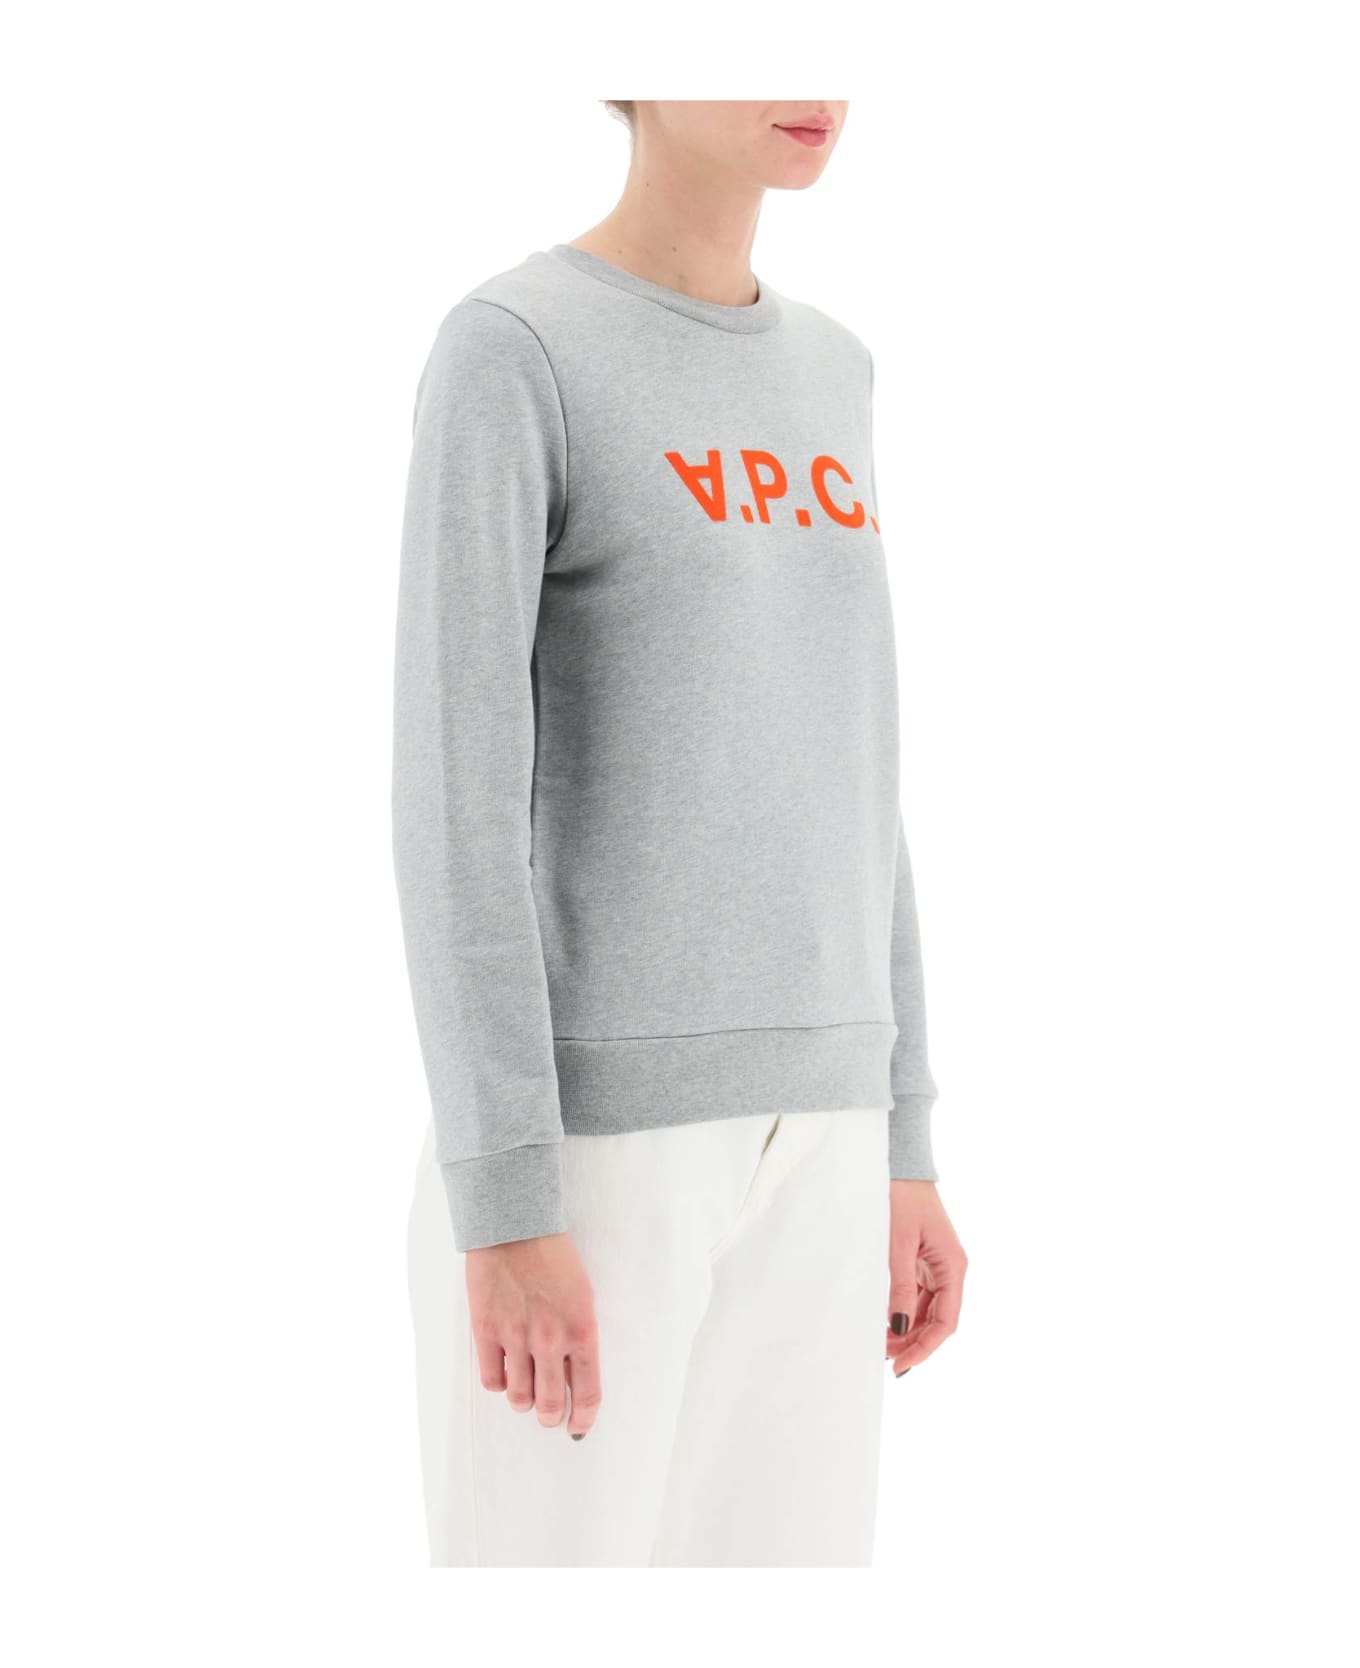 A.P.C. 'sweat Viva' Cotton Sweatshirt - GRIS CHINE VERMILLON (Grey) フリース